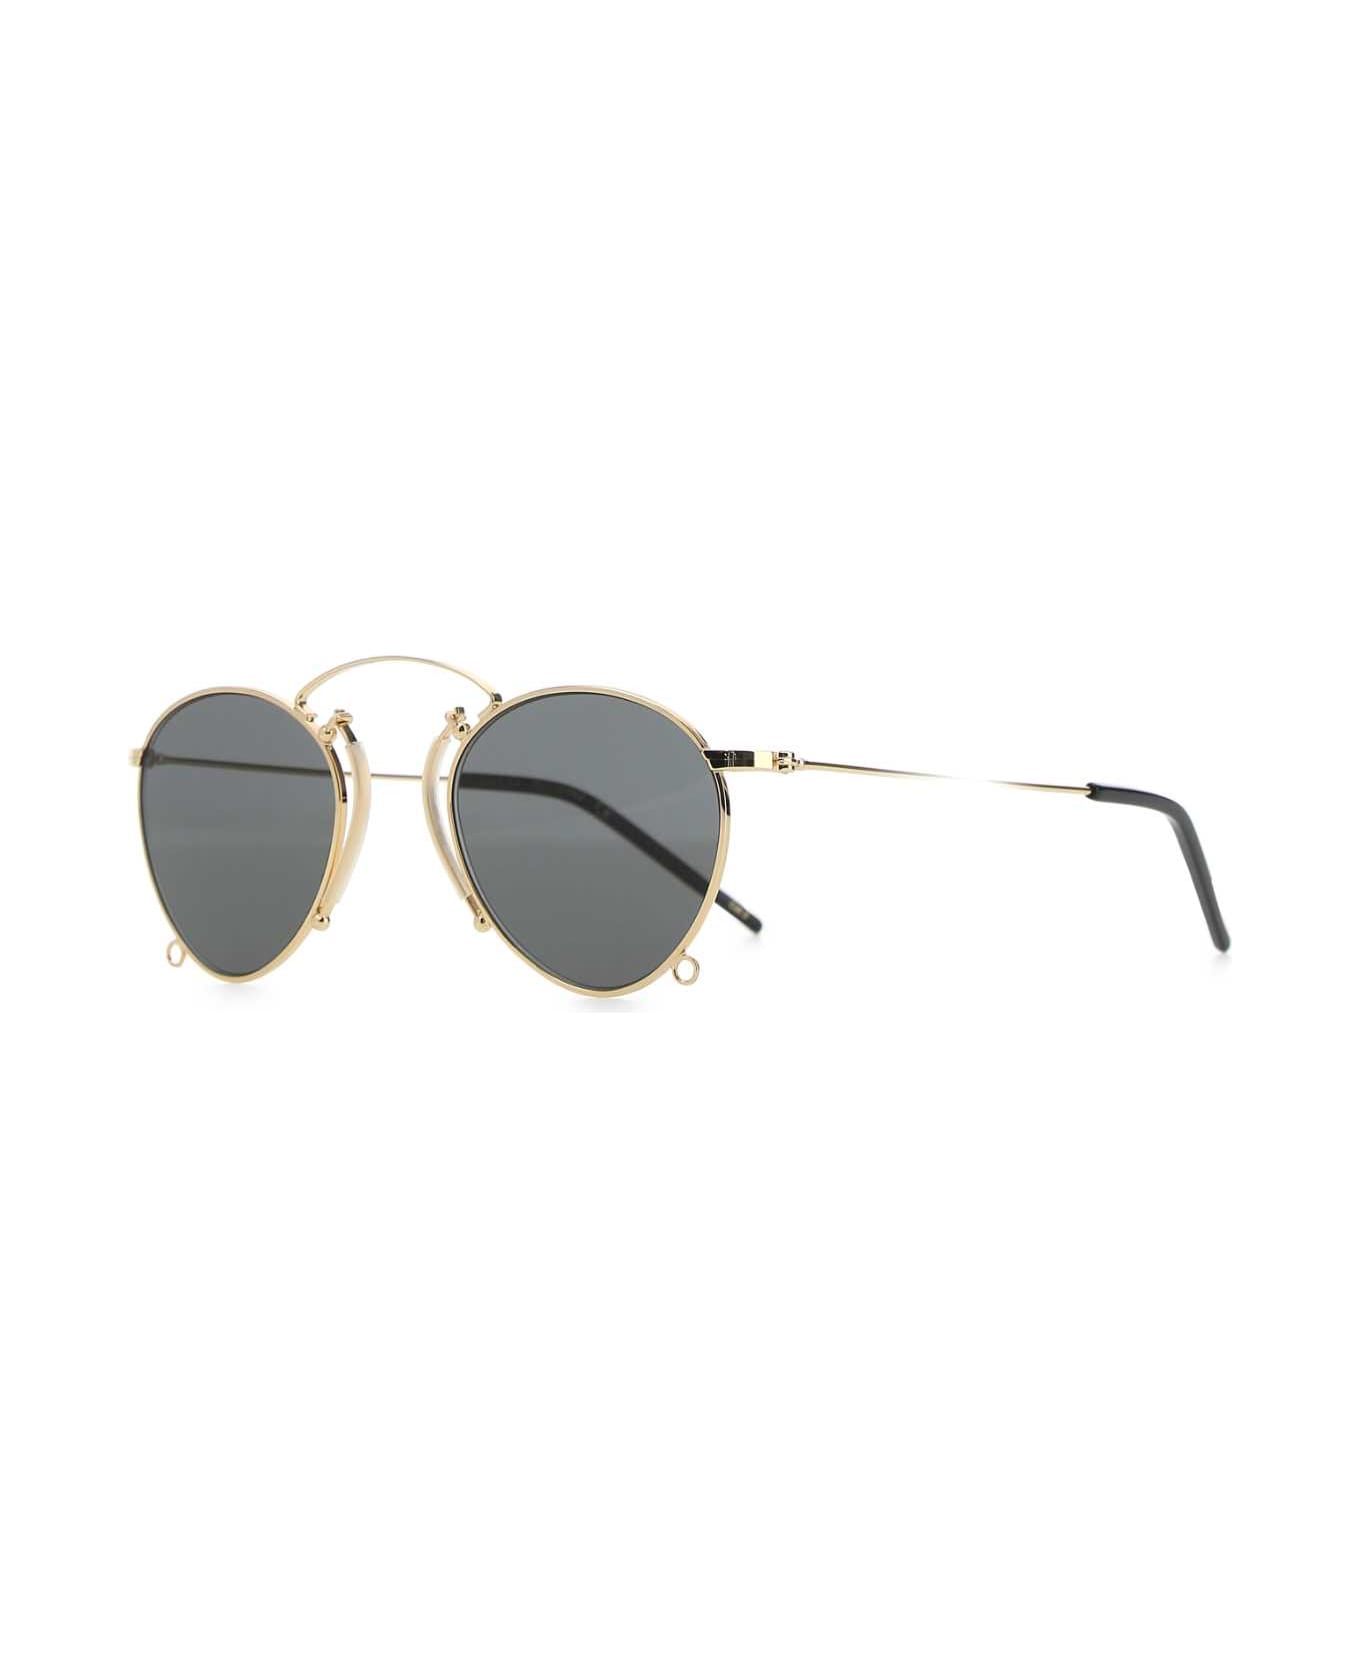 Gucci Metal Sunglasses - 8012 サングラス